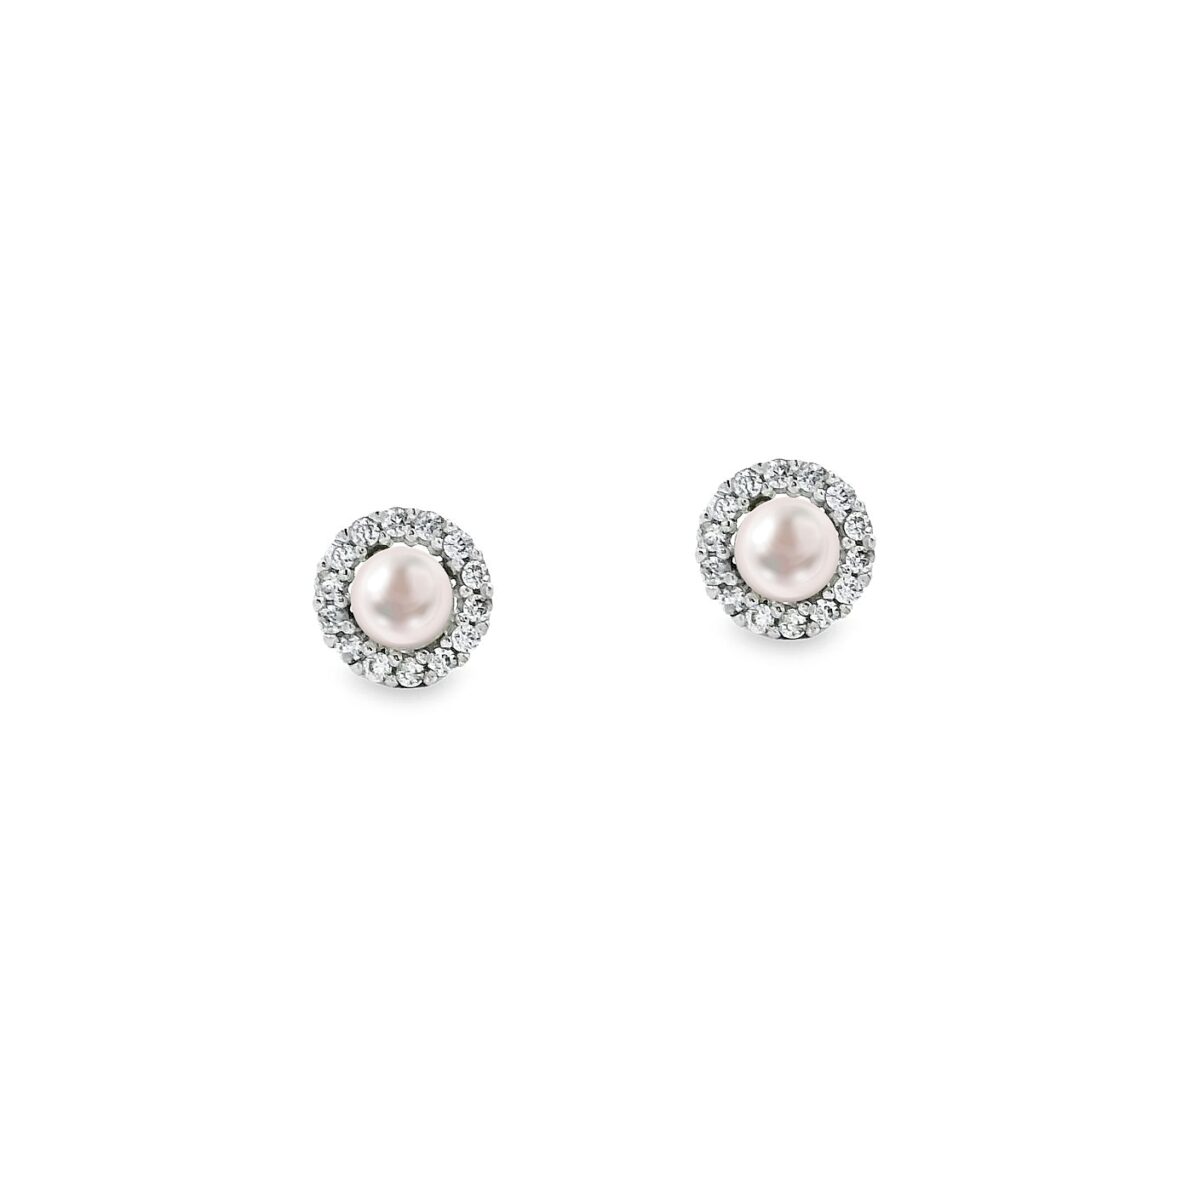 Jewellers - Σκουλαρίκια Ροζέτα με Μαργαριτάρι και ζιργκόν